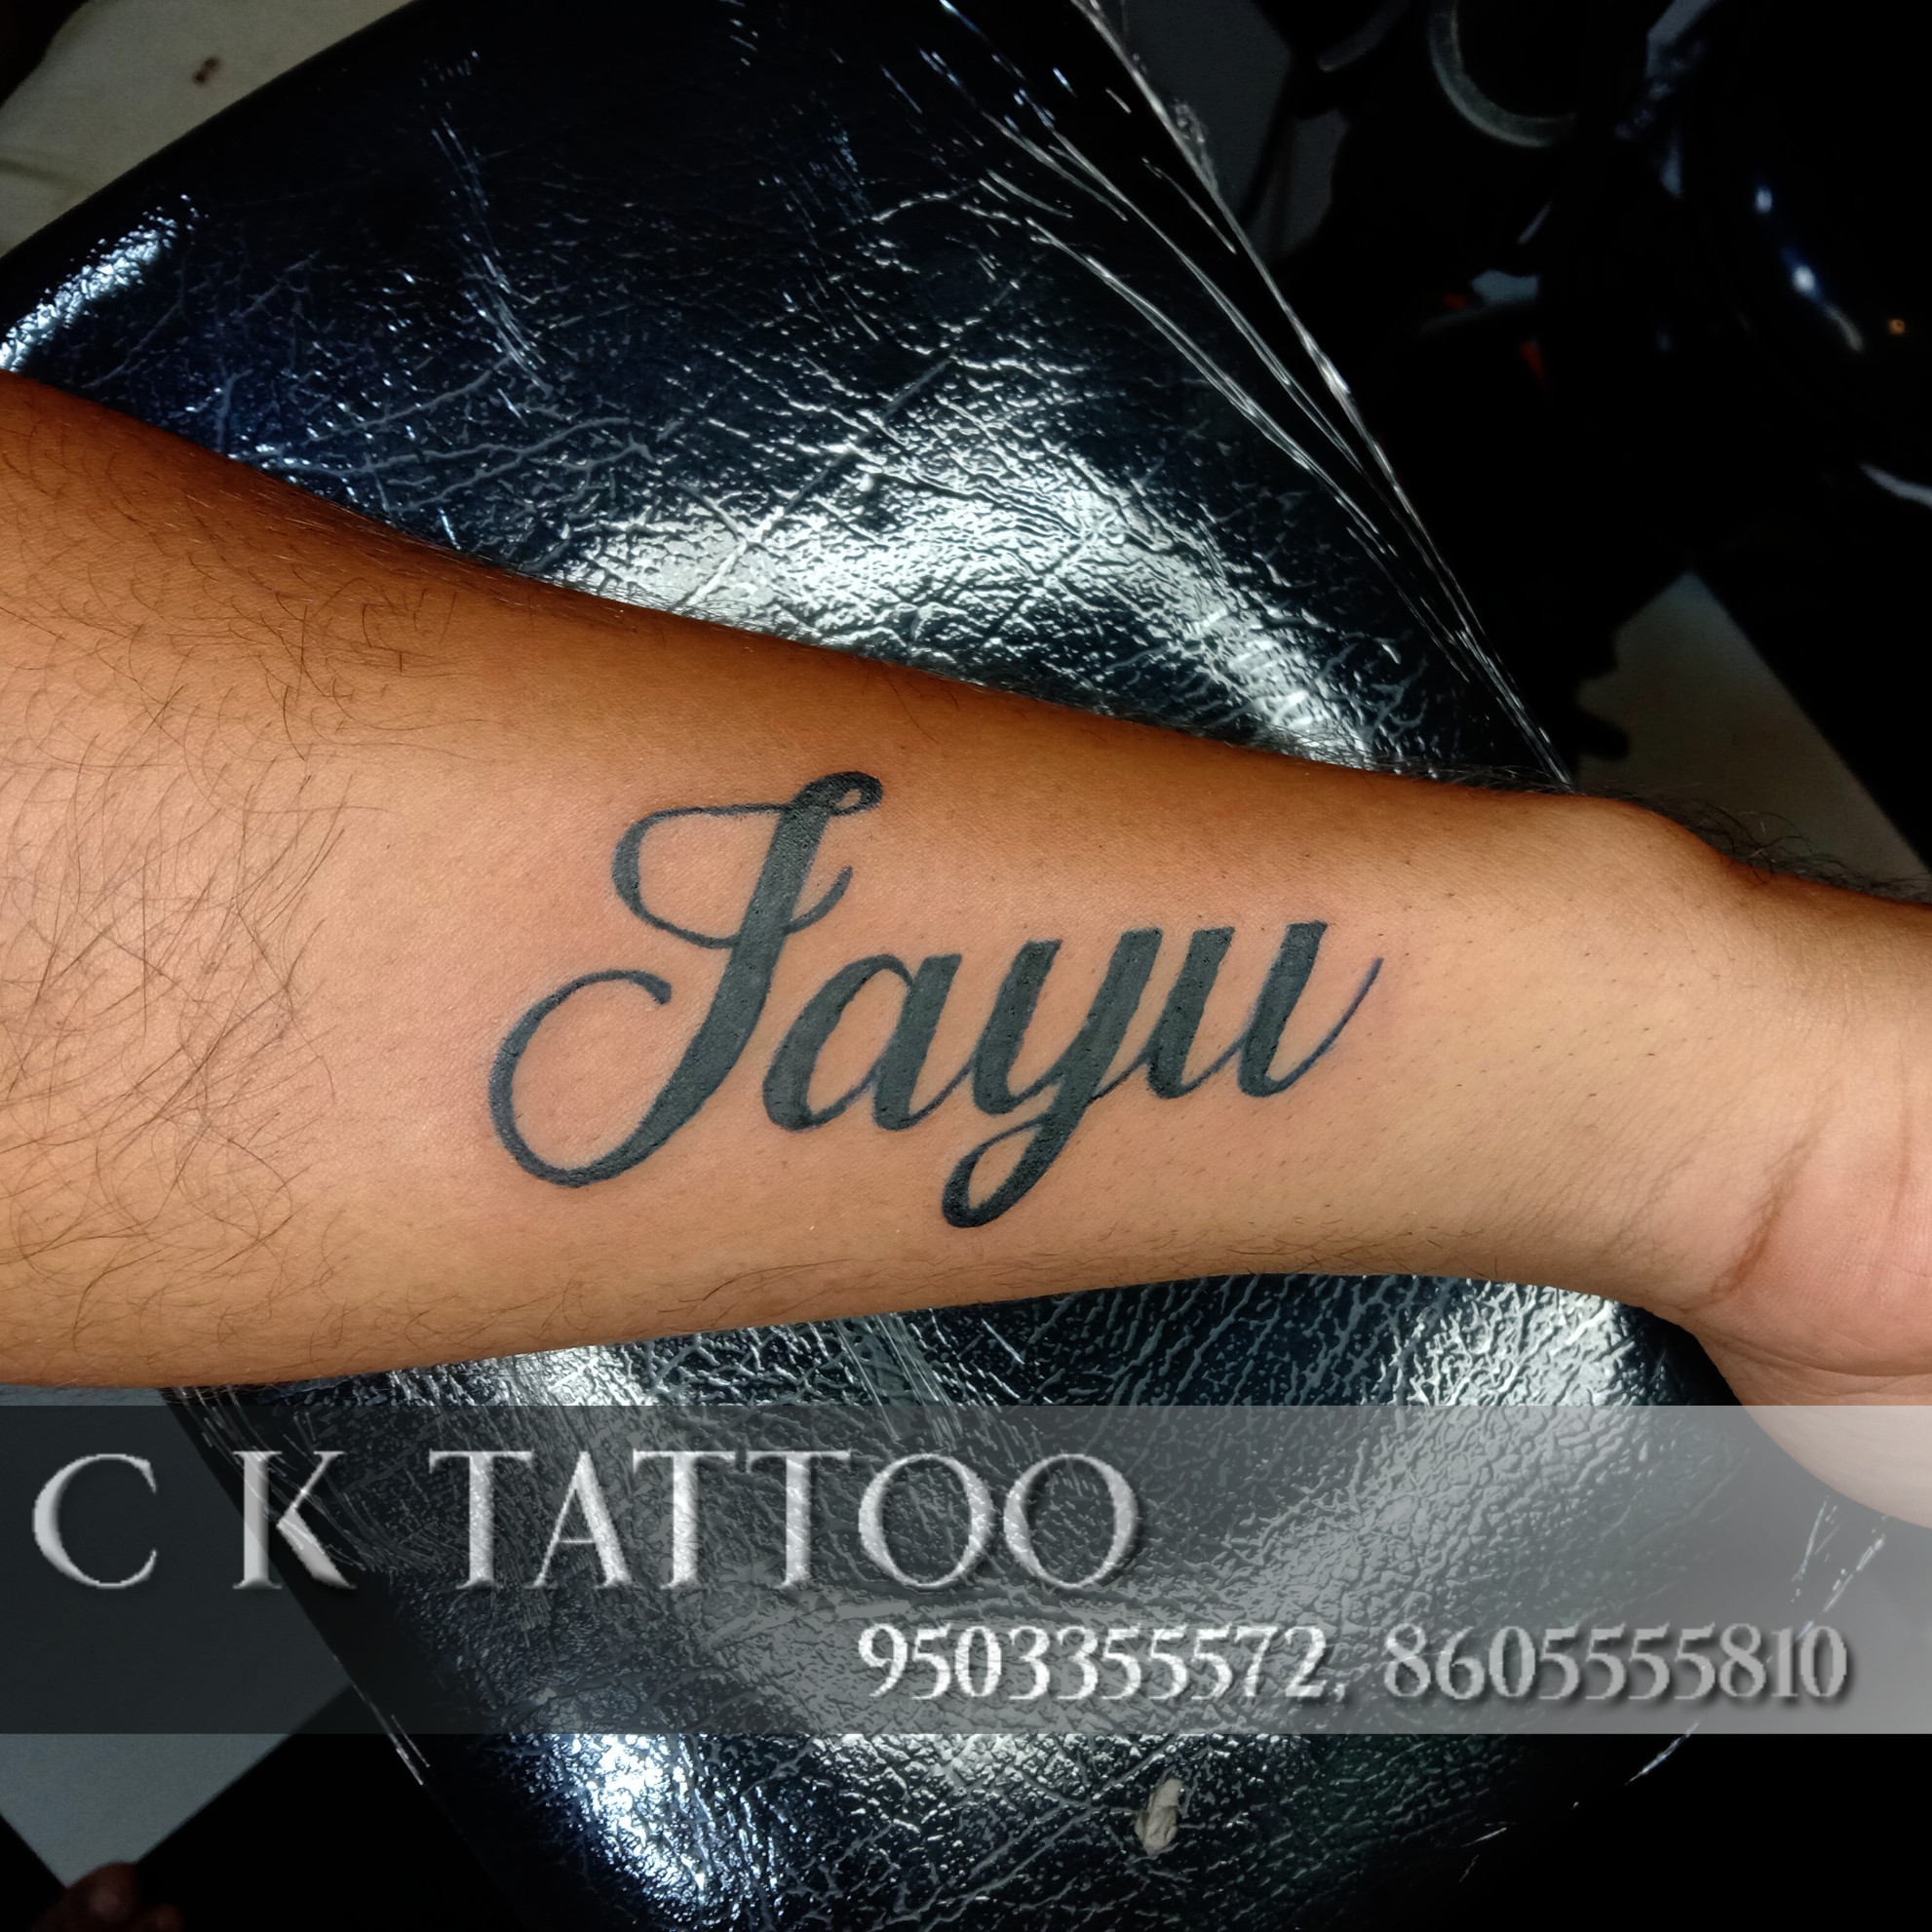 Tattoo uploaded by Samurai Tattoo mehsana  Jay name tattoo Jay tattoo  Jay name tattoo ideas Jay tattoo design  Tattoodo